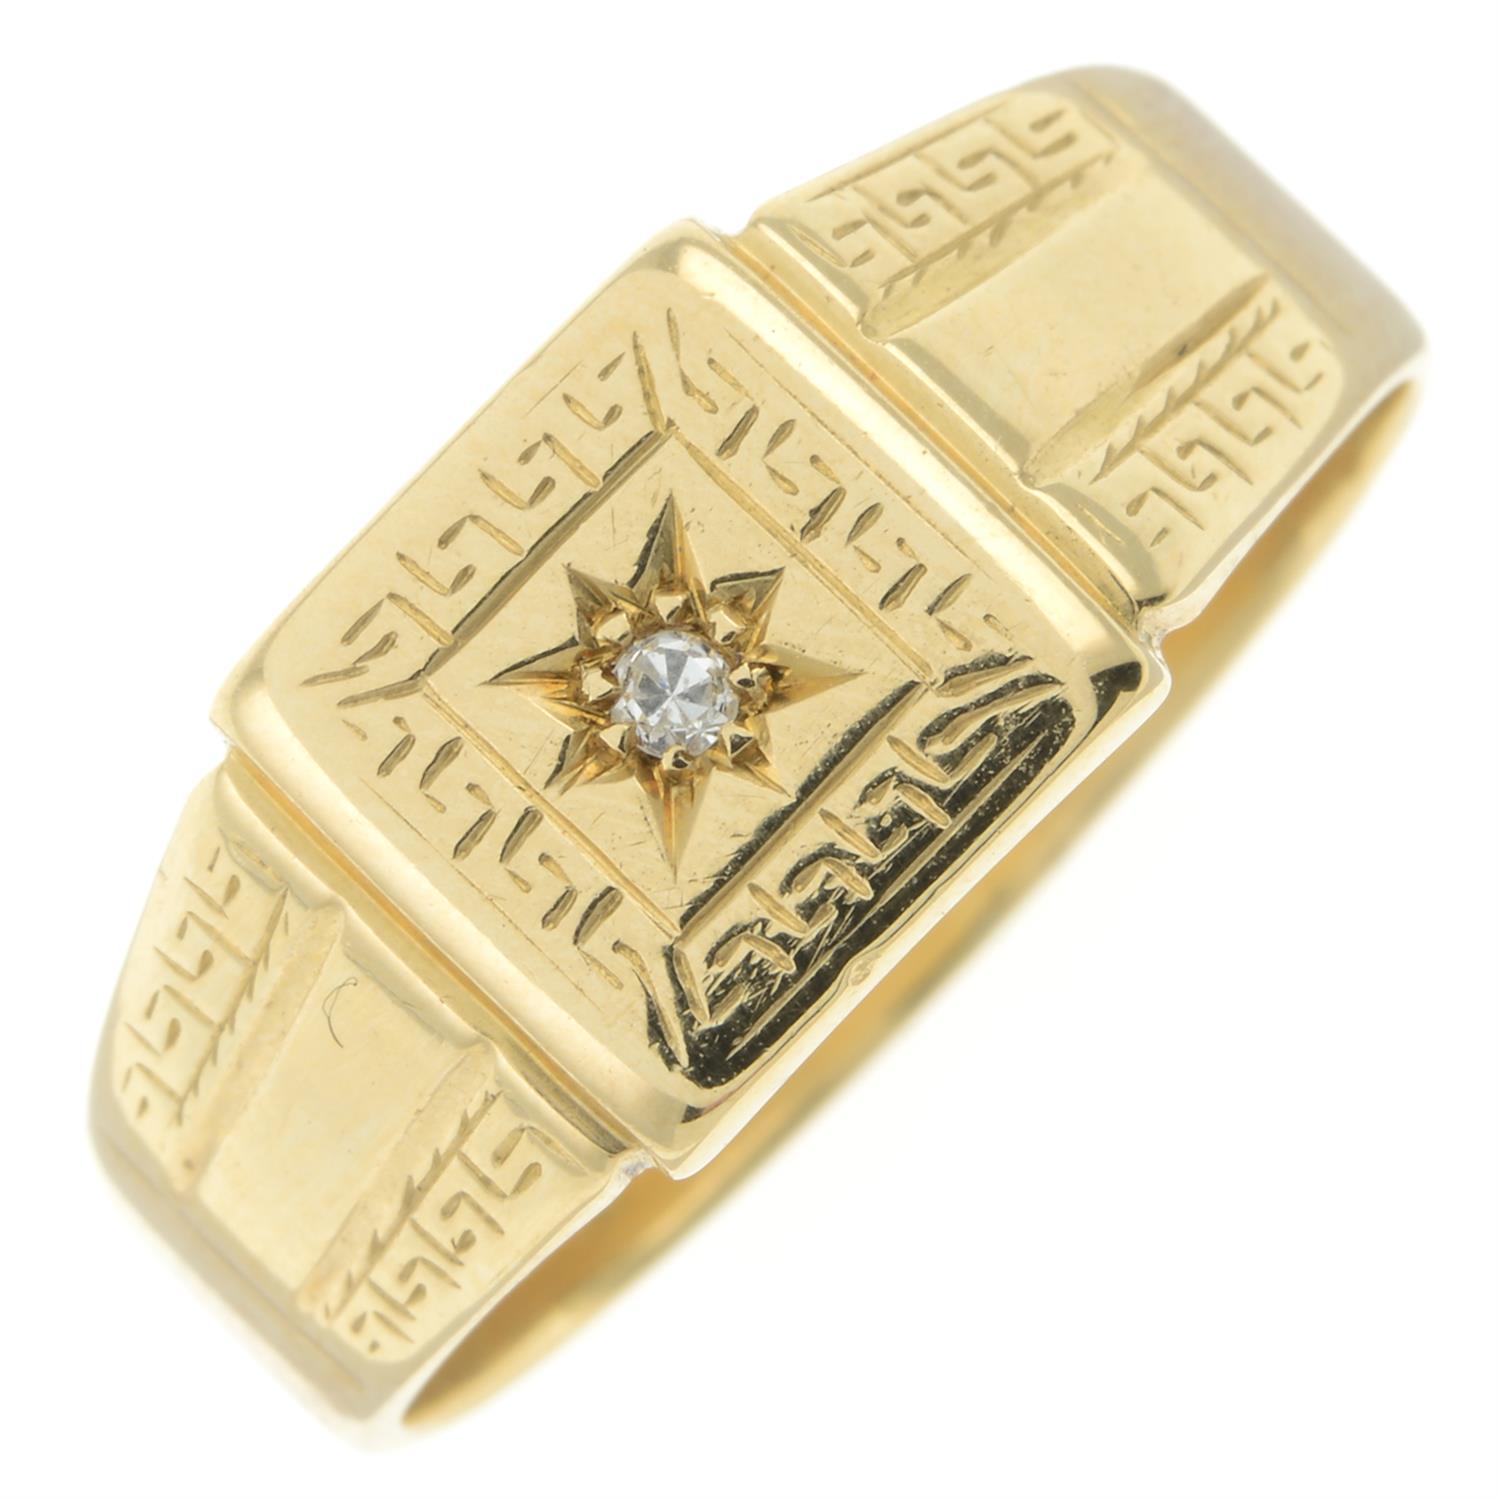 Early 20th century 18ct gold diamond signet ring